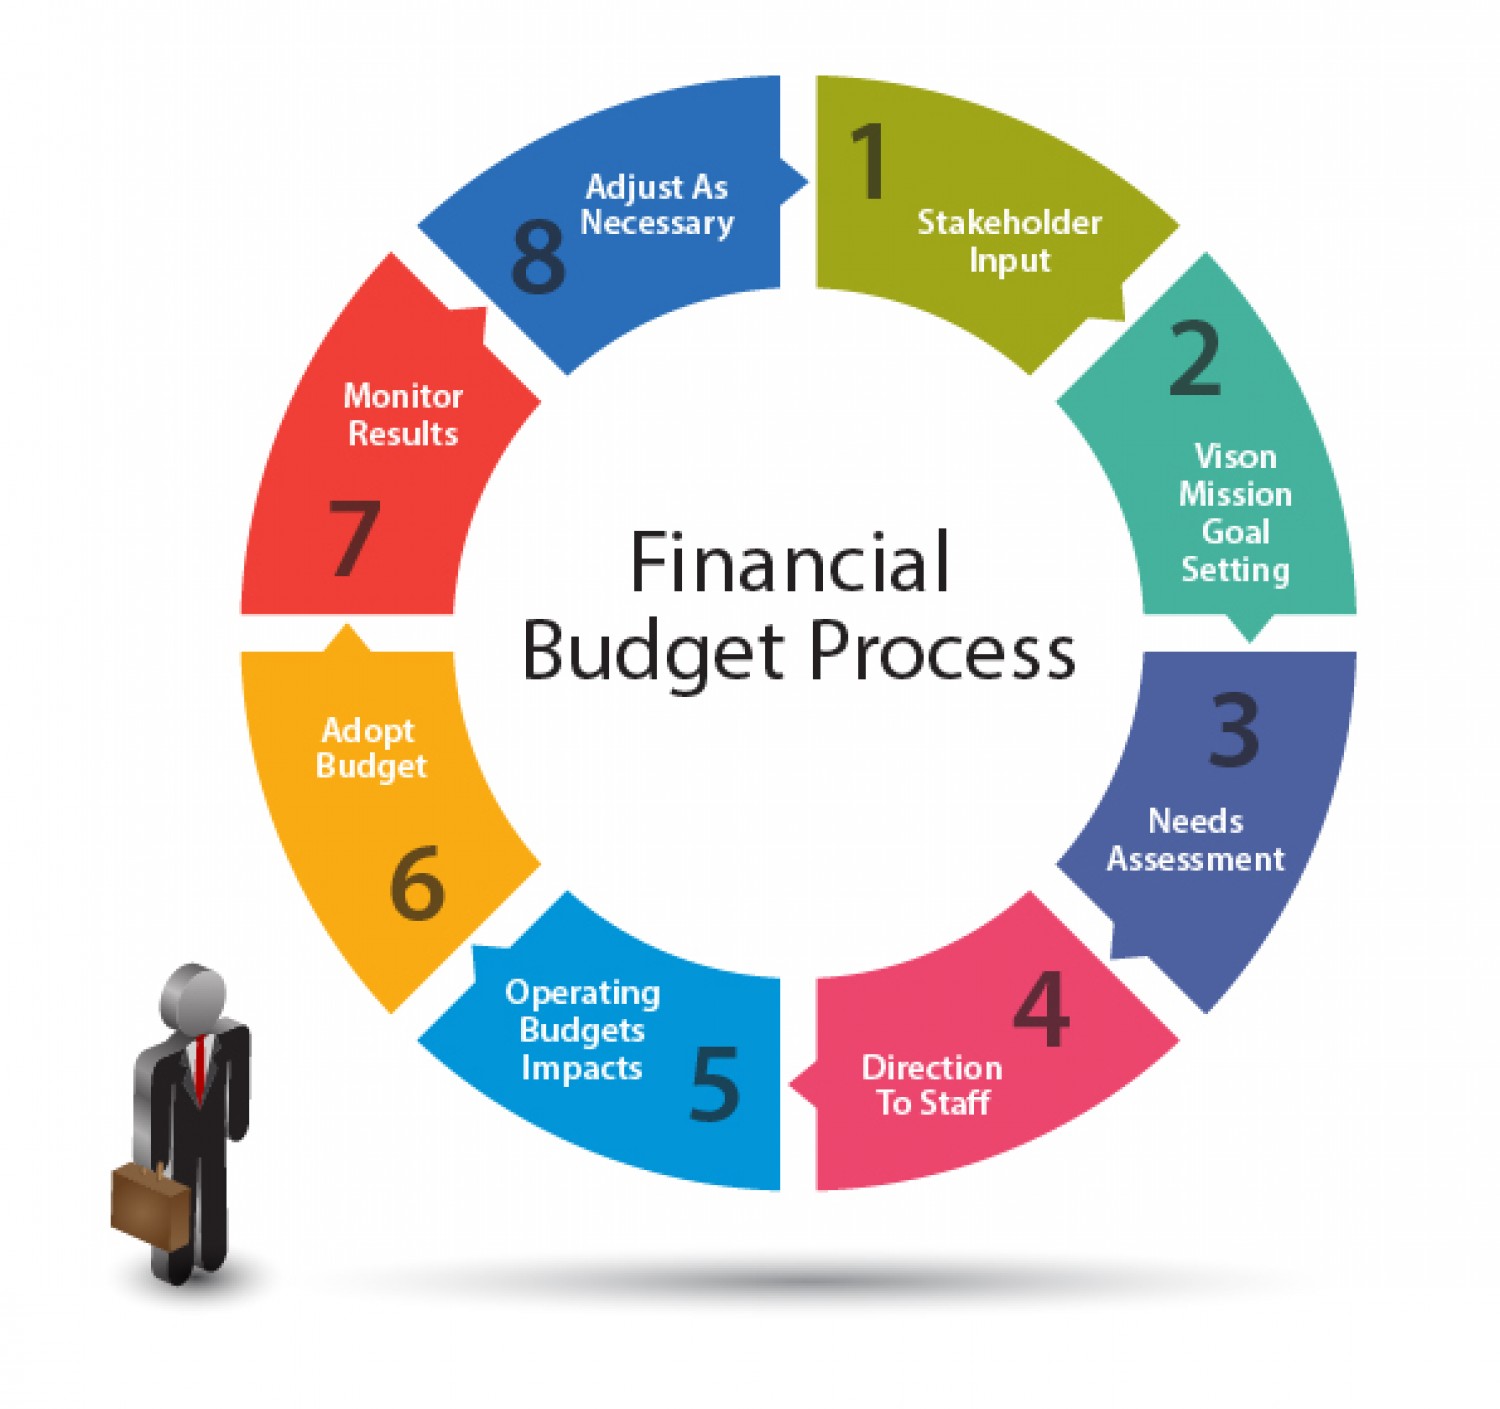 financial-budget-process-infographic-koz1wY-clipart.jpg